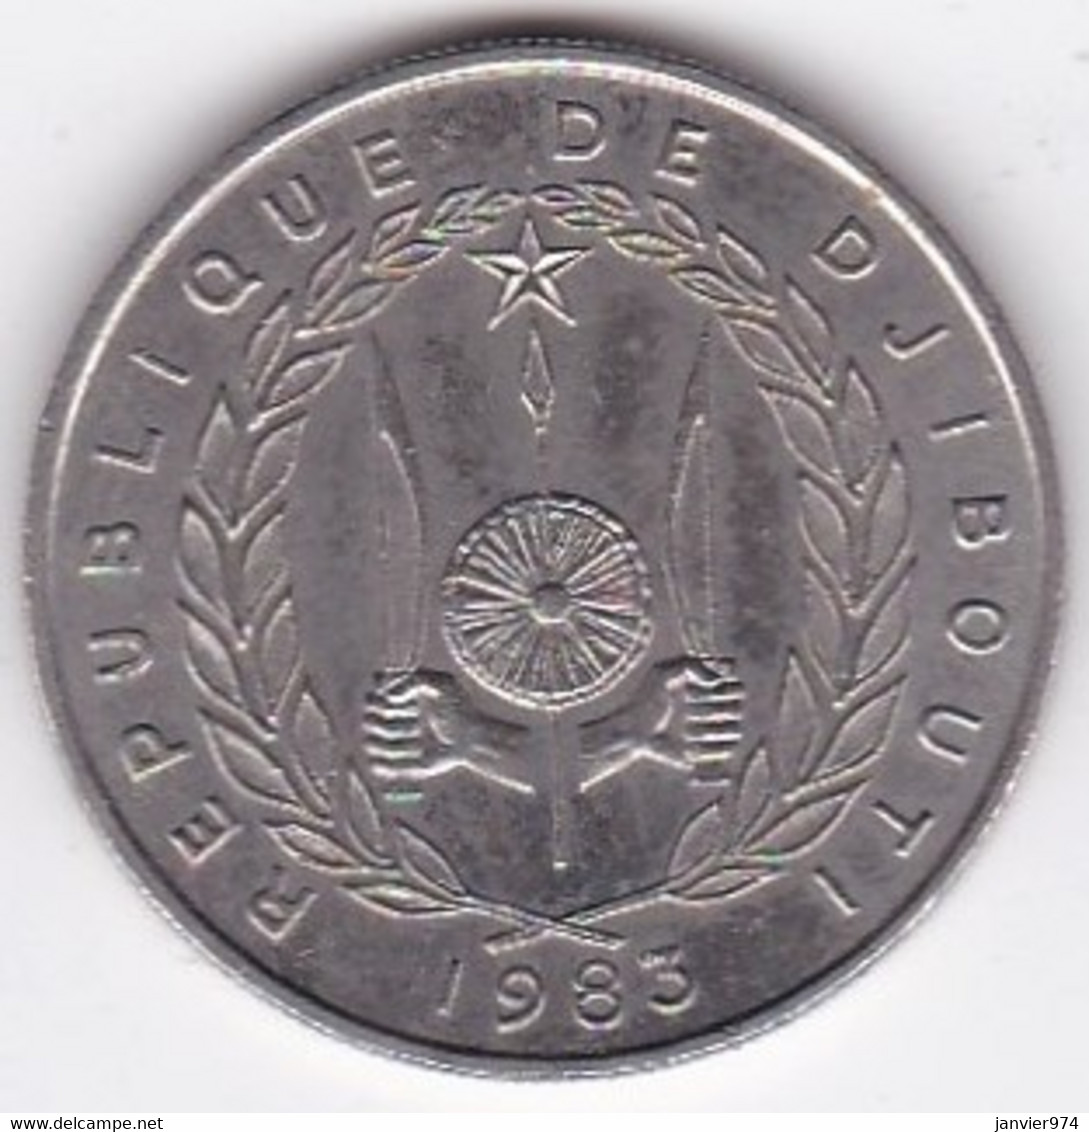 République De Djibouti 50 Francs 1983 , Cupronickel, KM# 25 - Djibouti